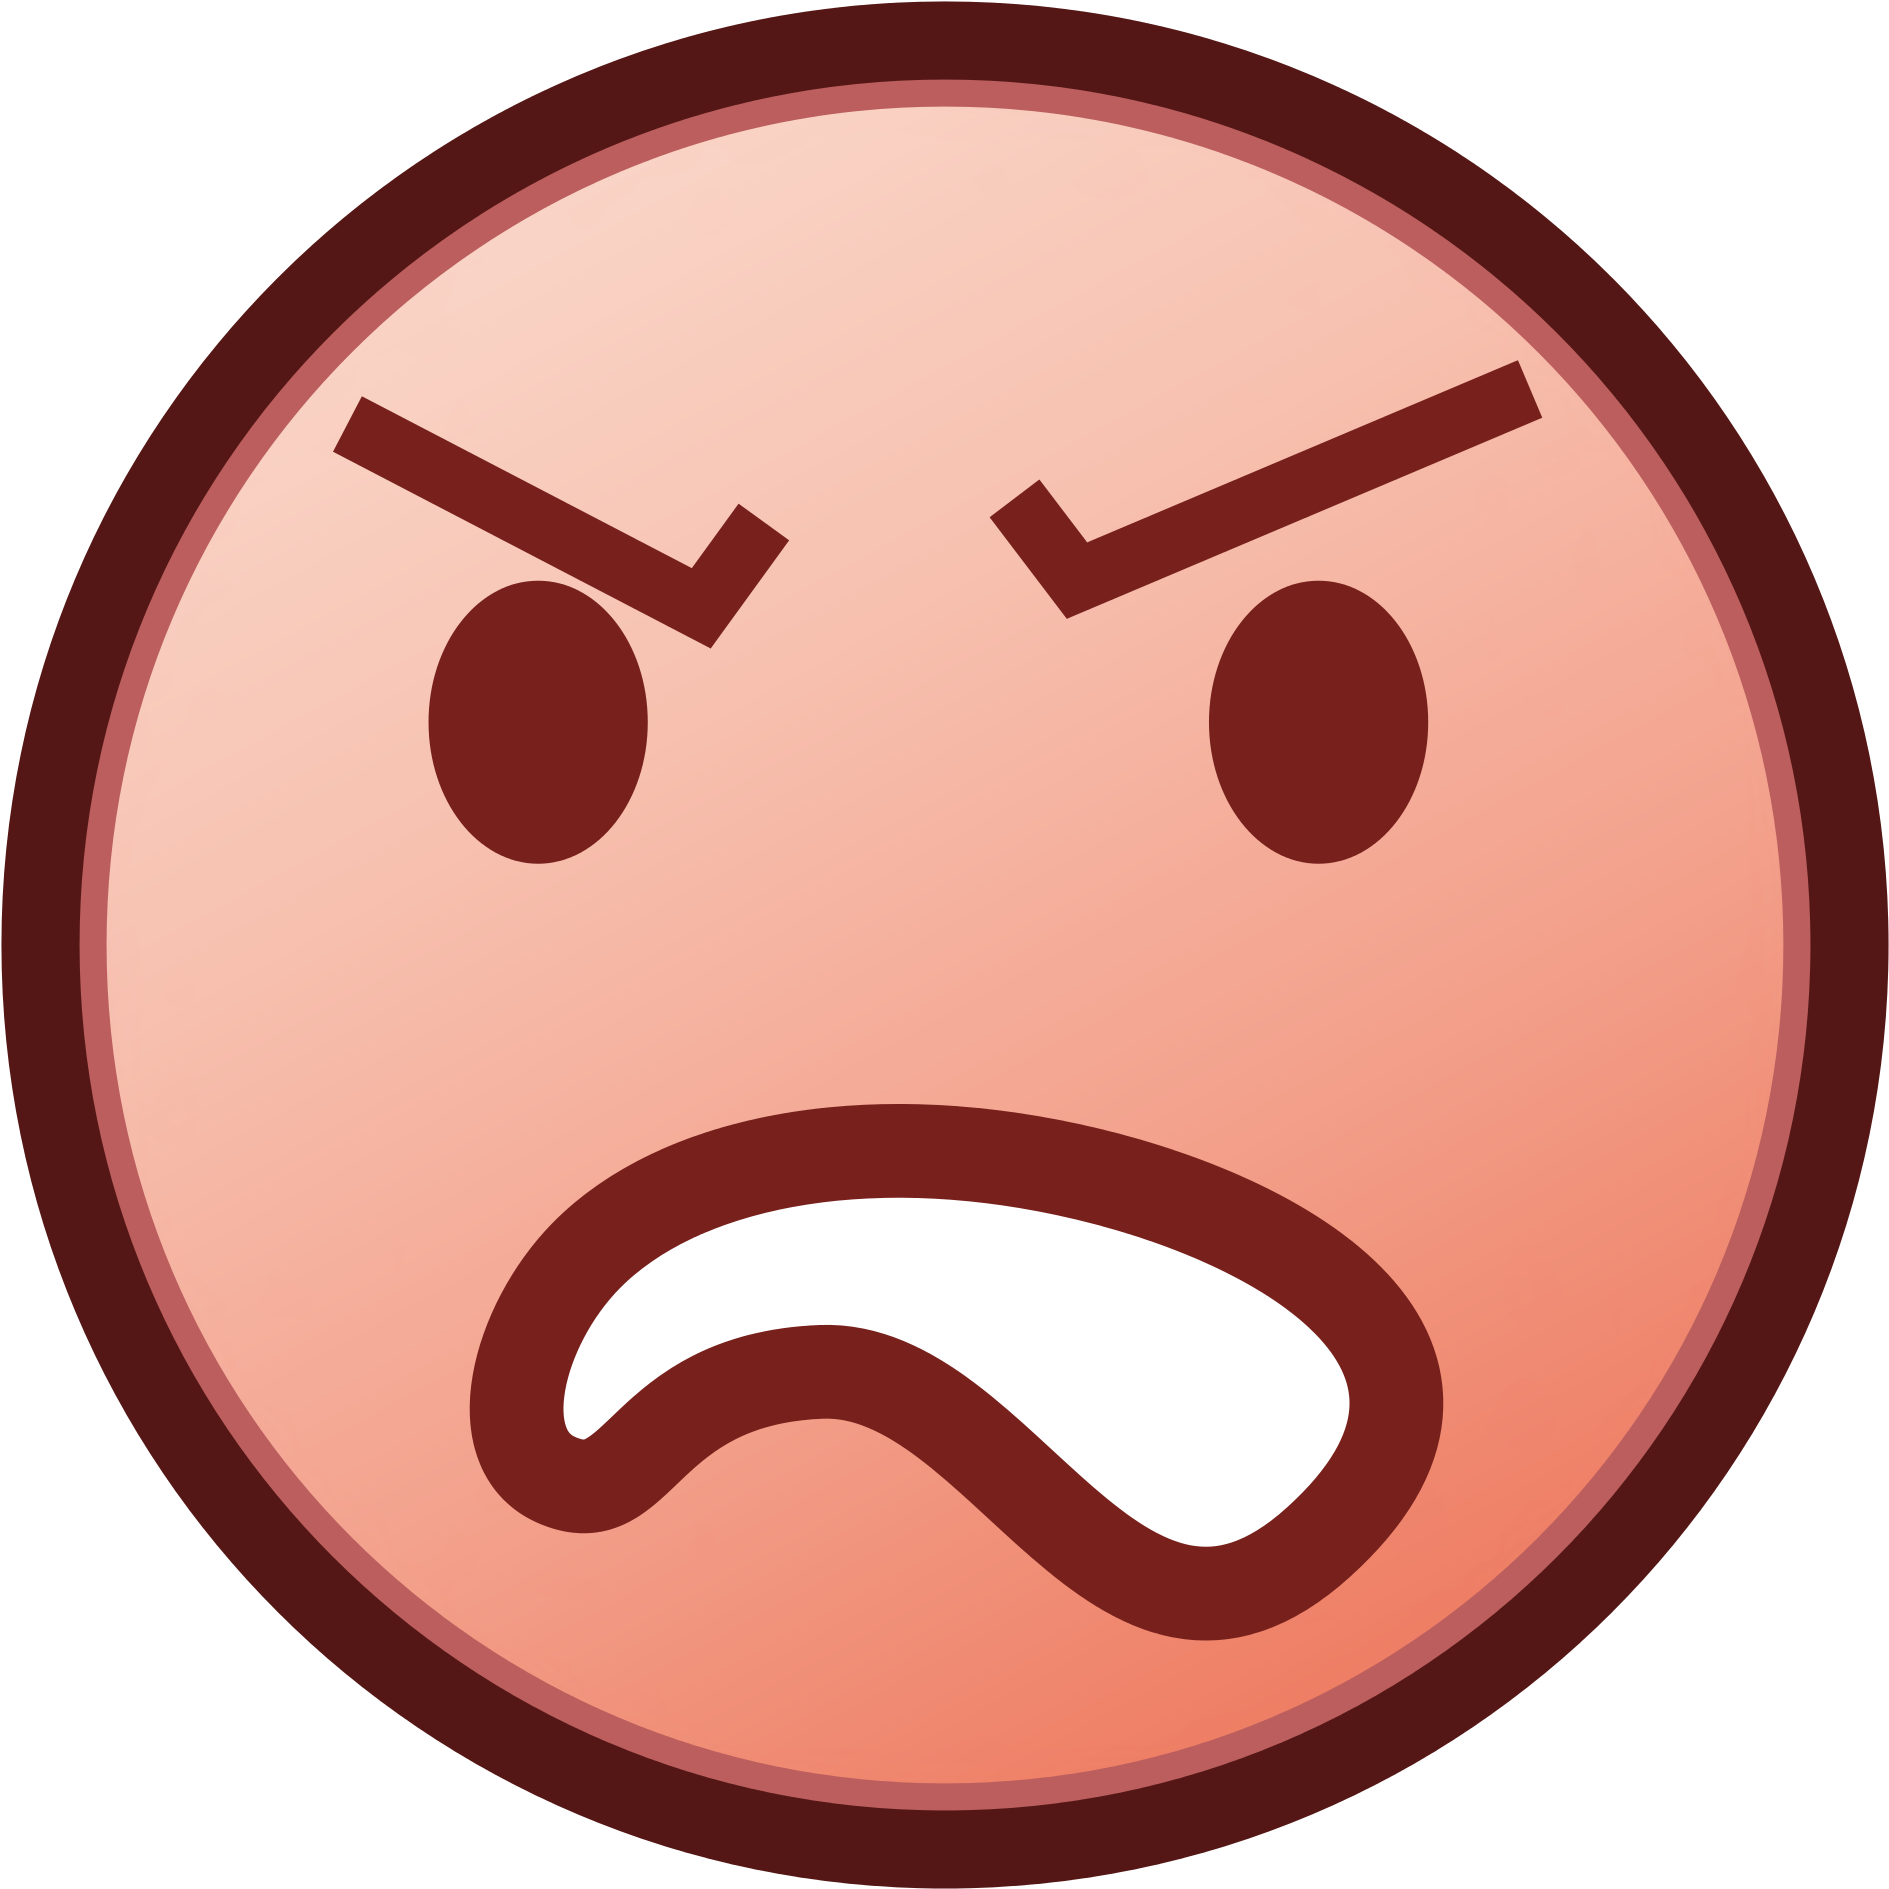 Angry Emoji Graphic PNG